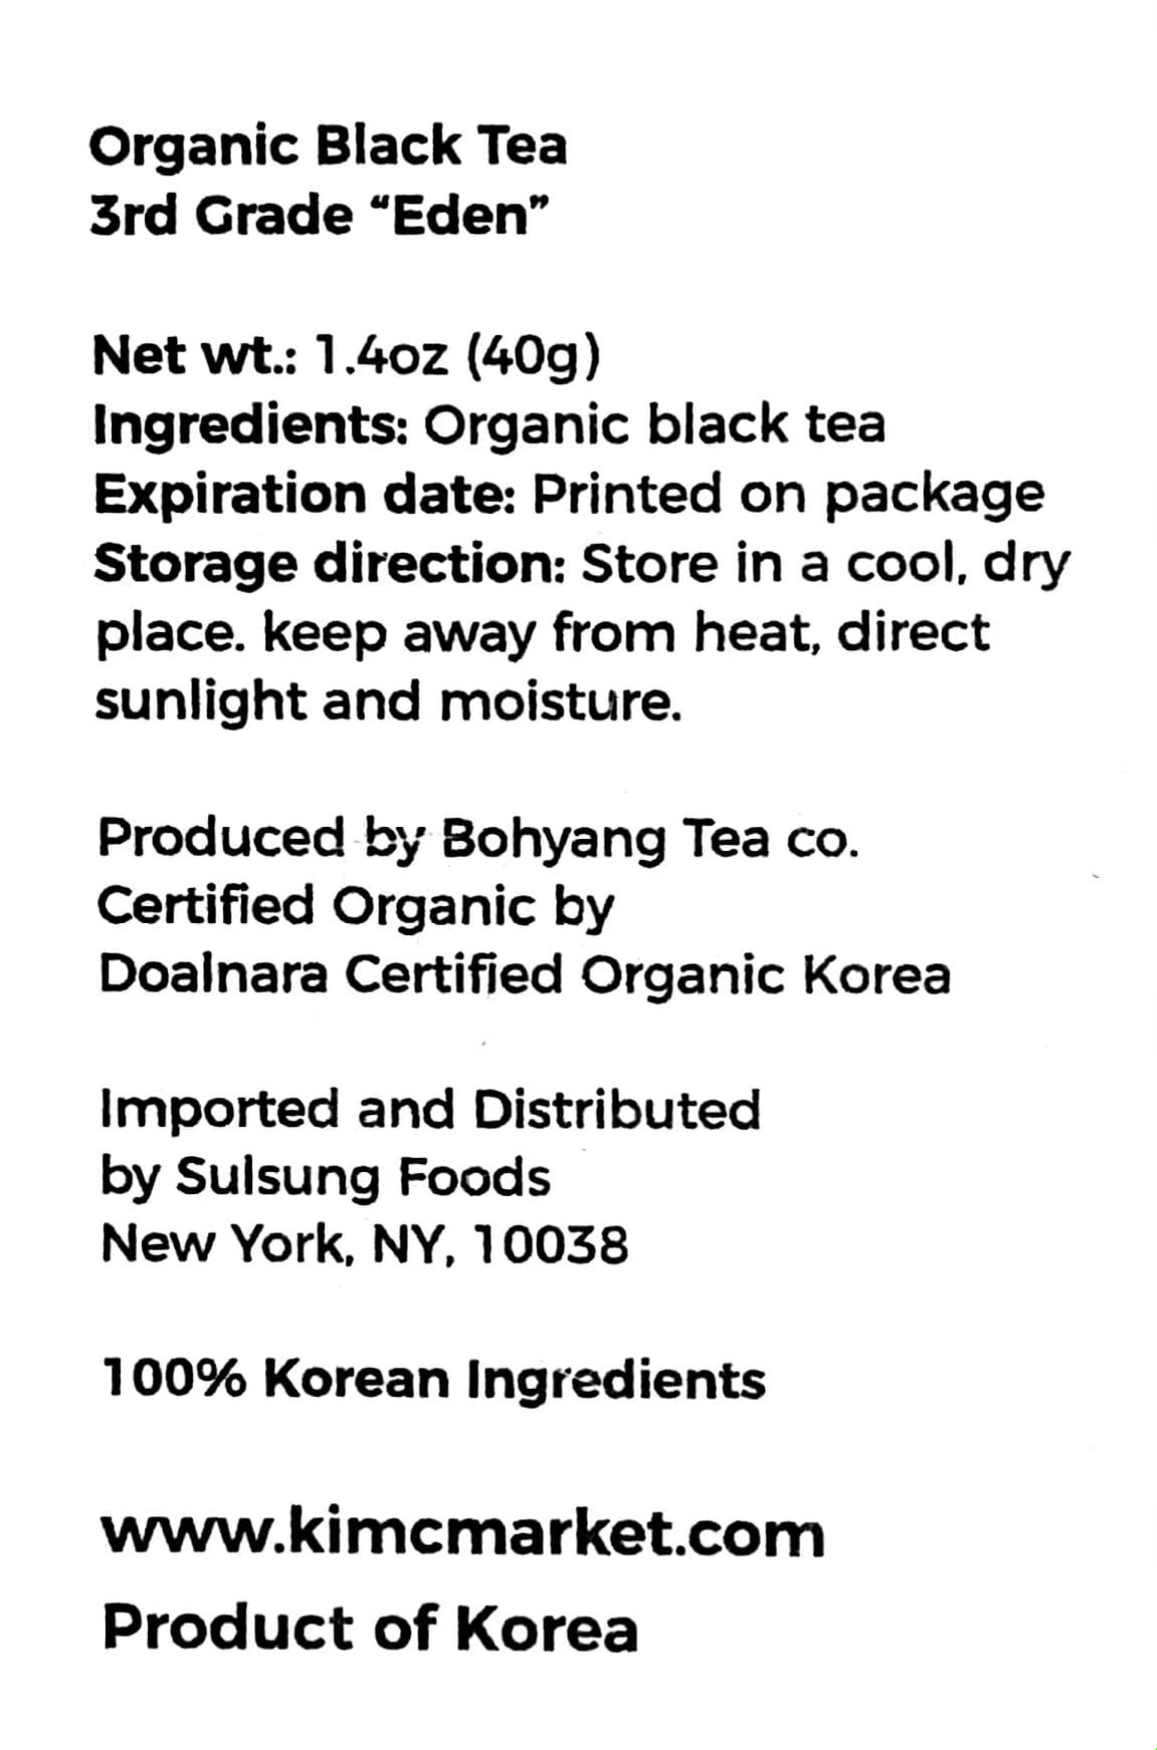 Organic Black Tea Eden - Kim'C Market